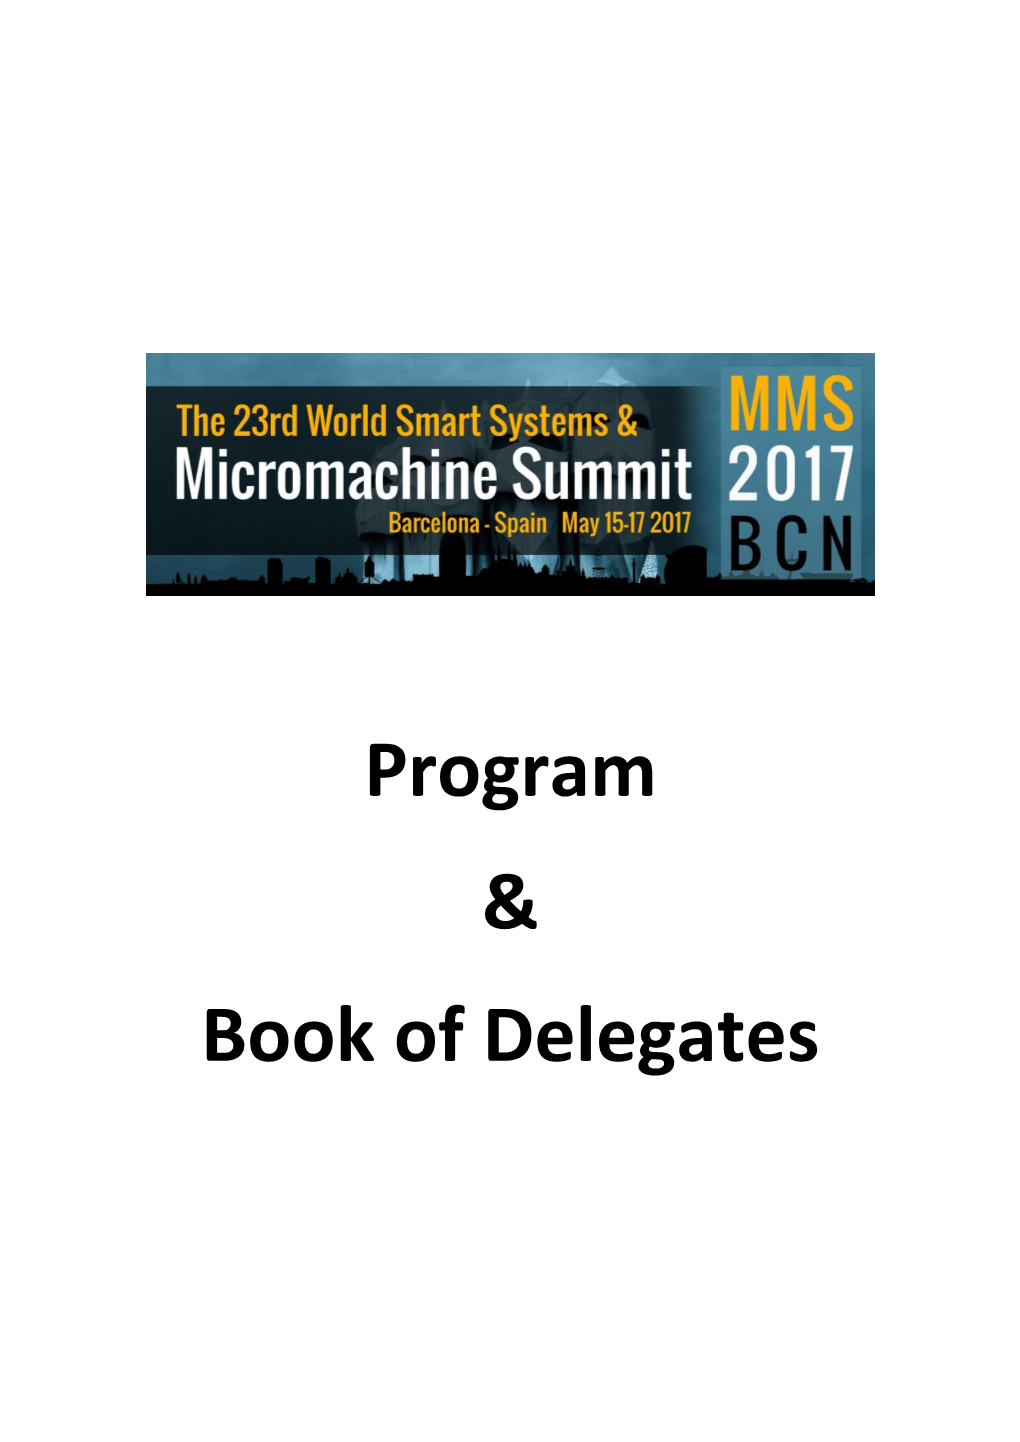 Program & Book of Delegates